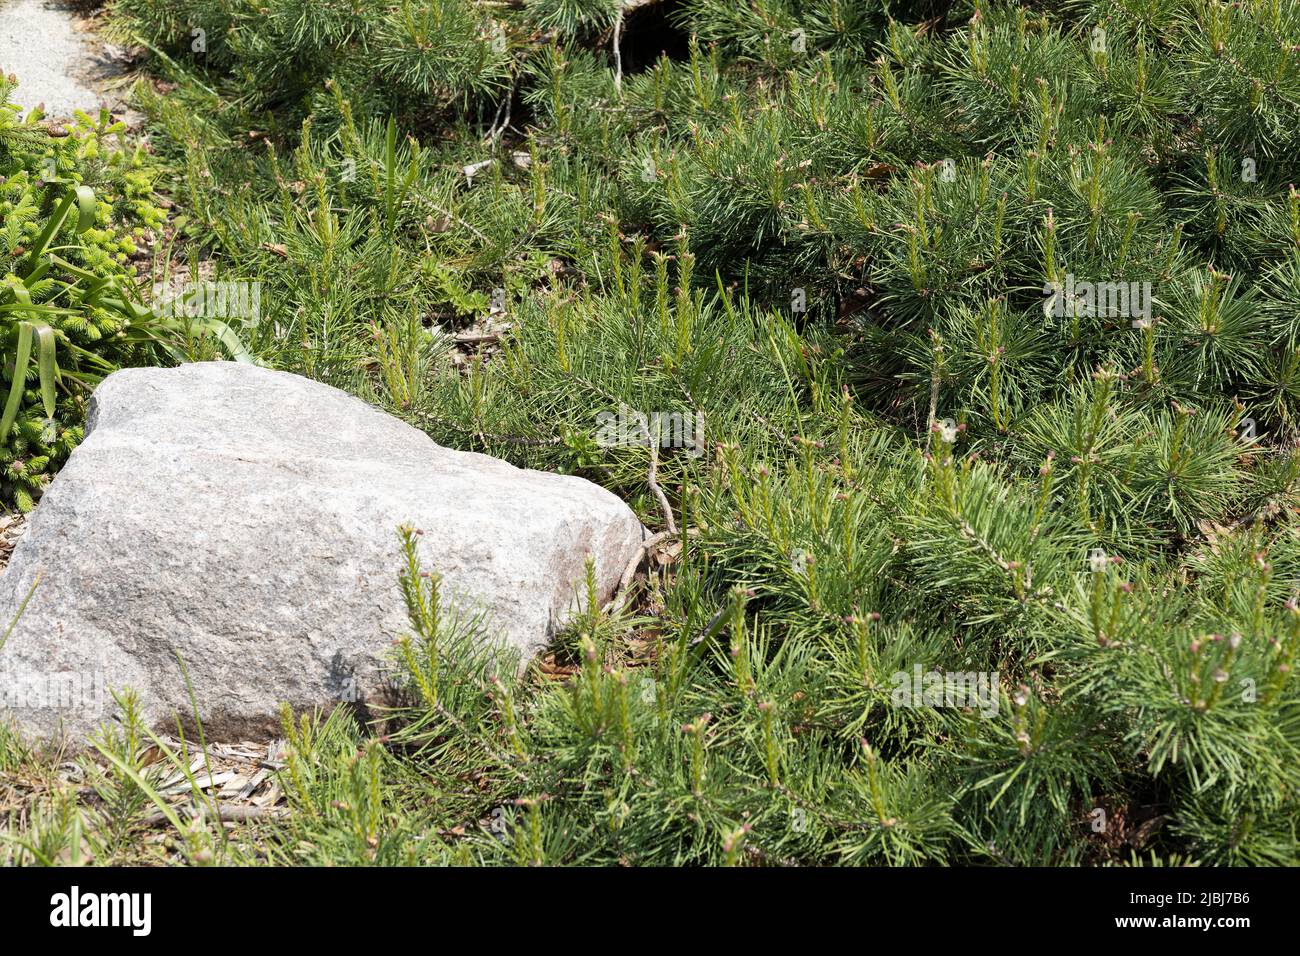 Pinus sylvestris 'hillside creeper' Scots pine. Stock Photo